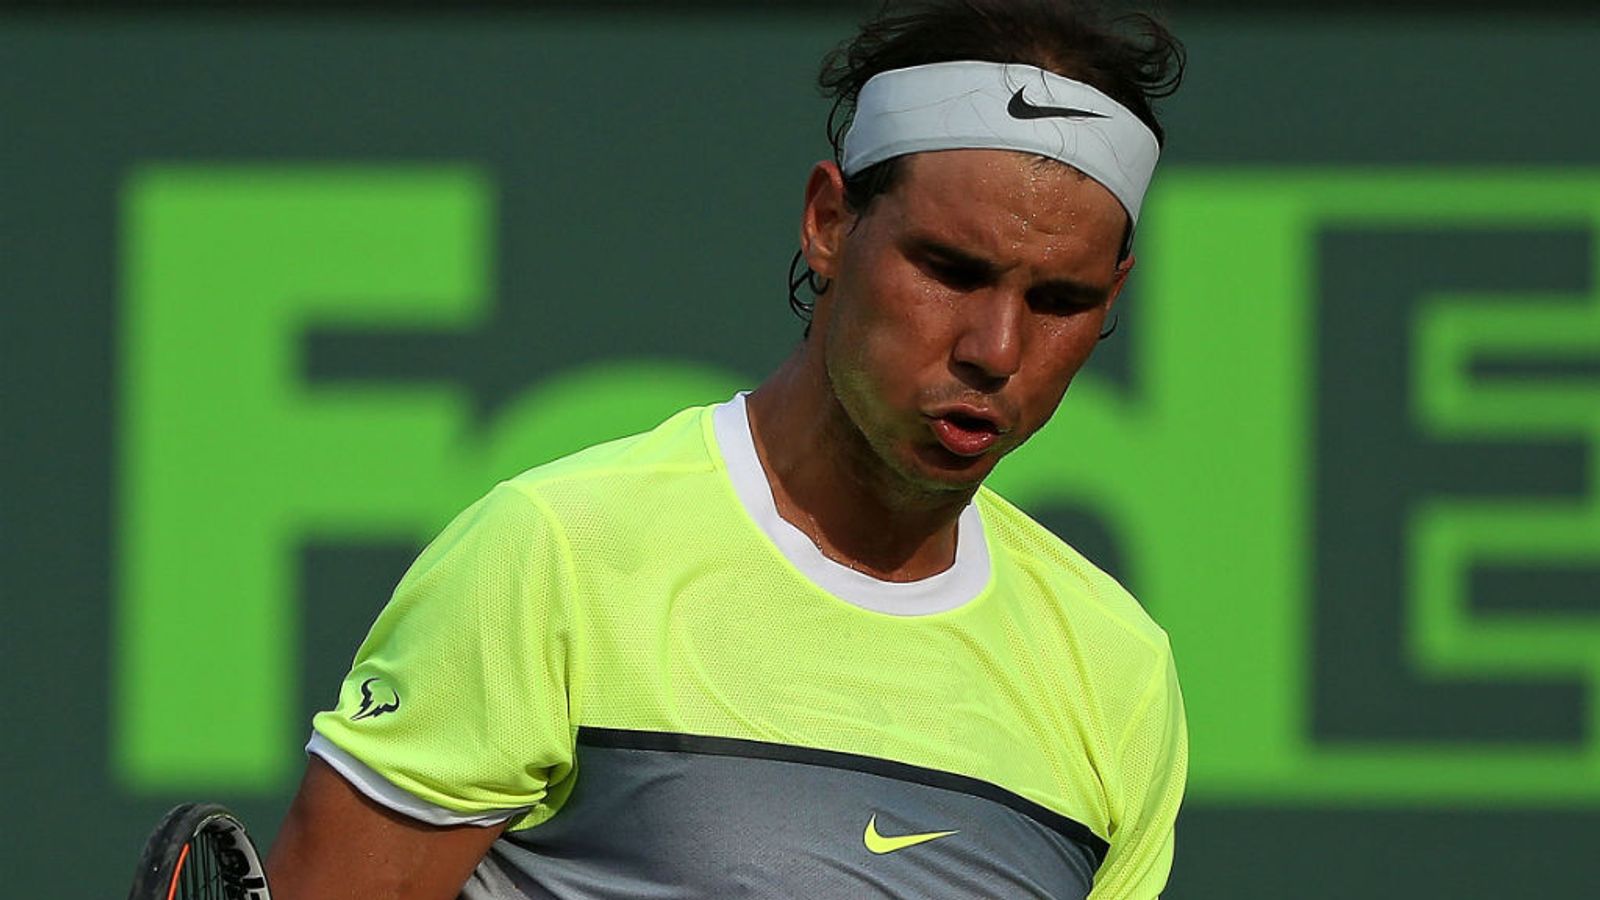 Rafael Nadal reaches third round at Miami Open along with Stan Warwrinka | Tennis News ...